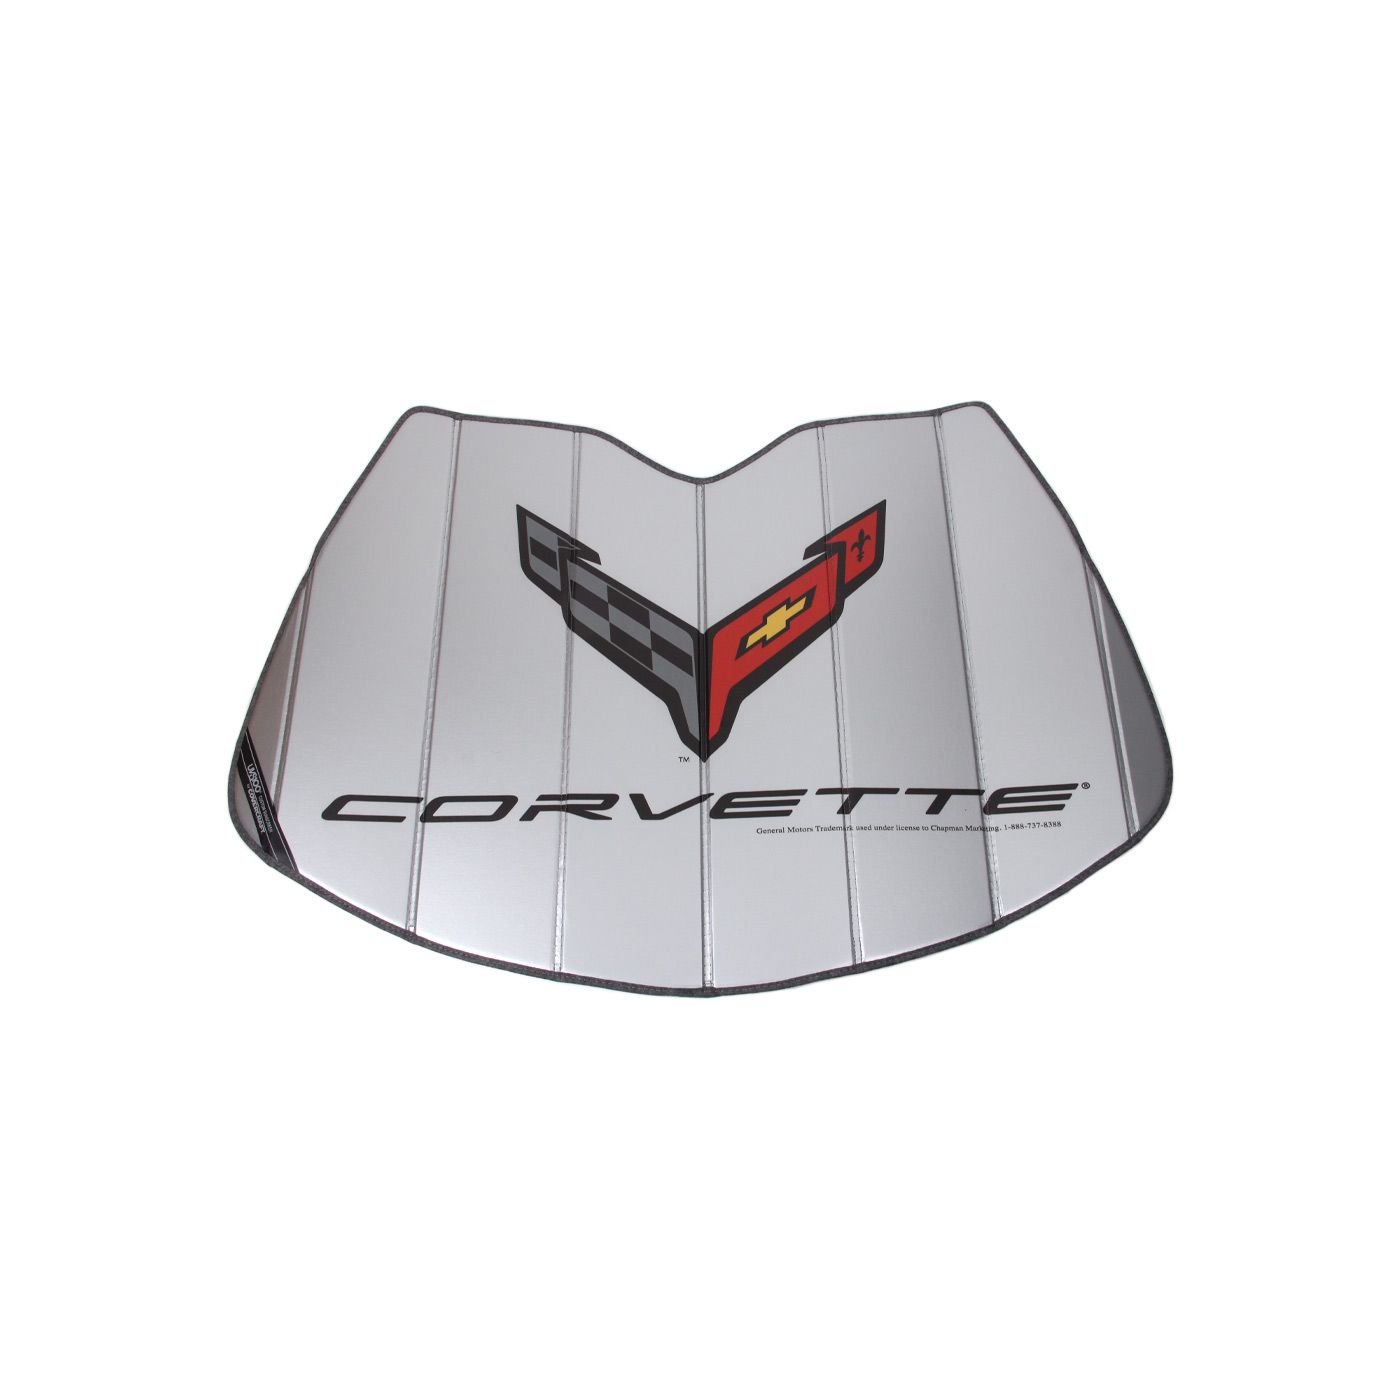 C8 Corvette, Next Generation Covercraft Insulated Windshield Sun Shade w/C8 Emblem